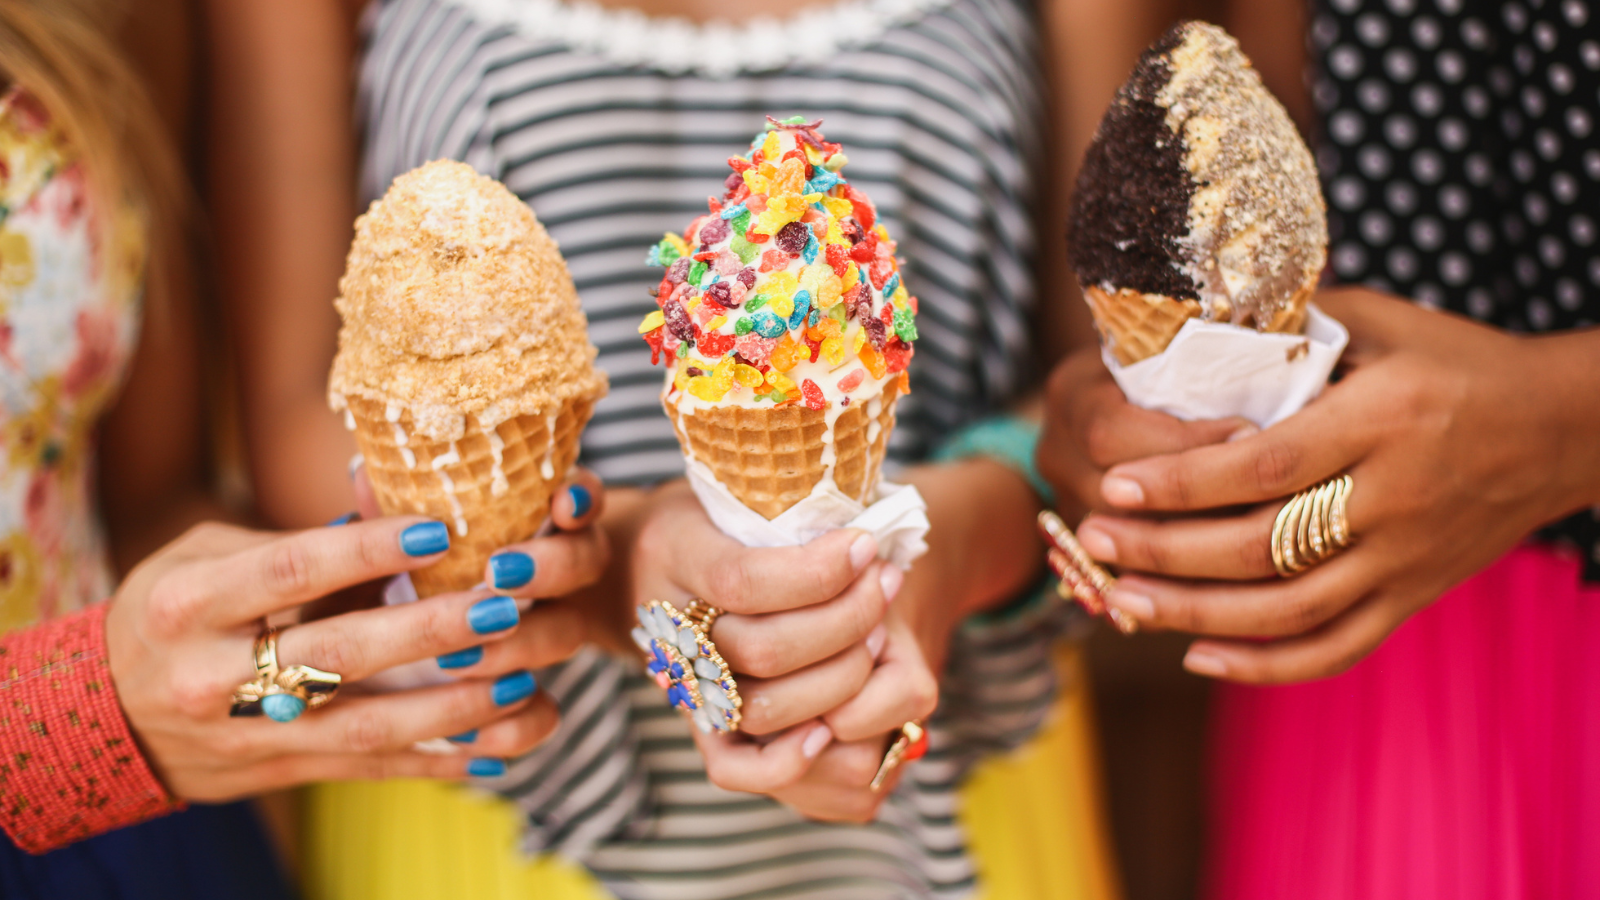 3 women holding ice cream cones